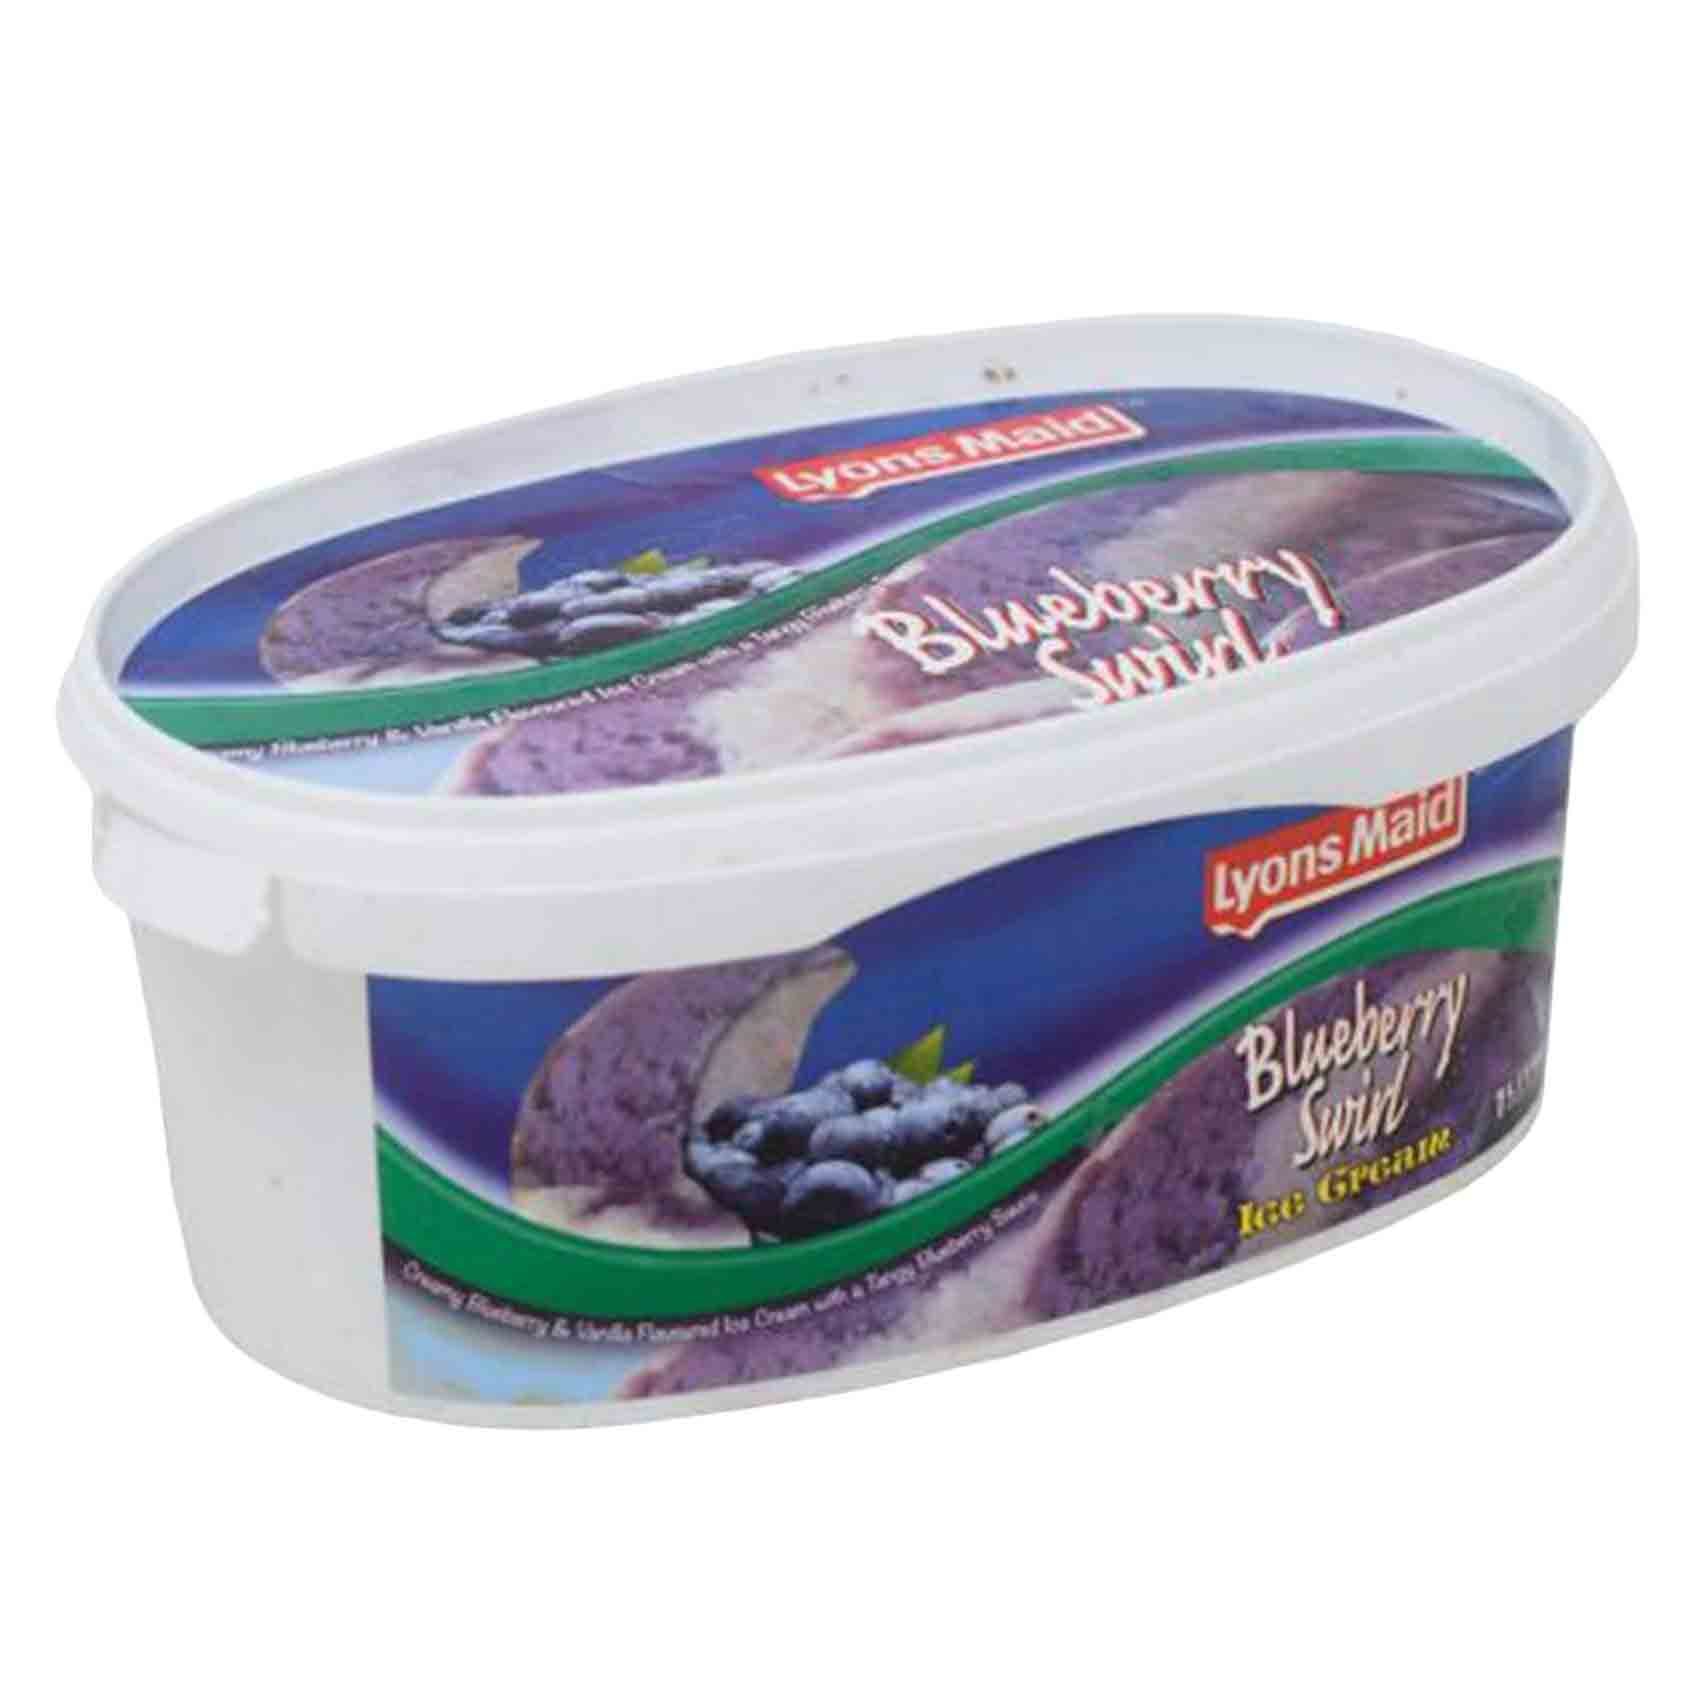 Lyons Maid Blueberry Swirl Ice Cream 1L